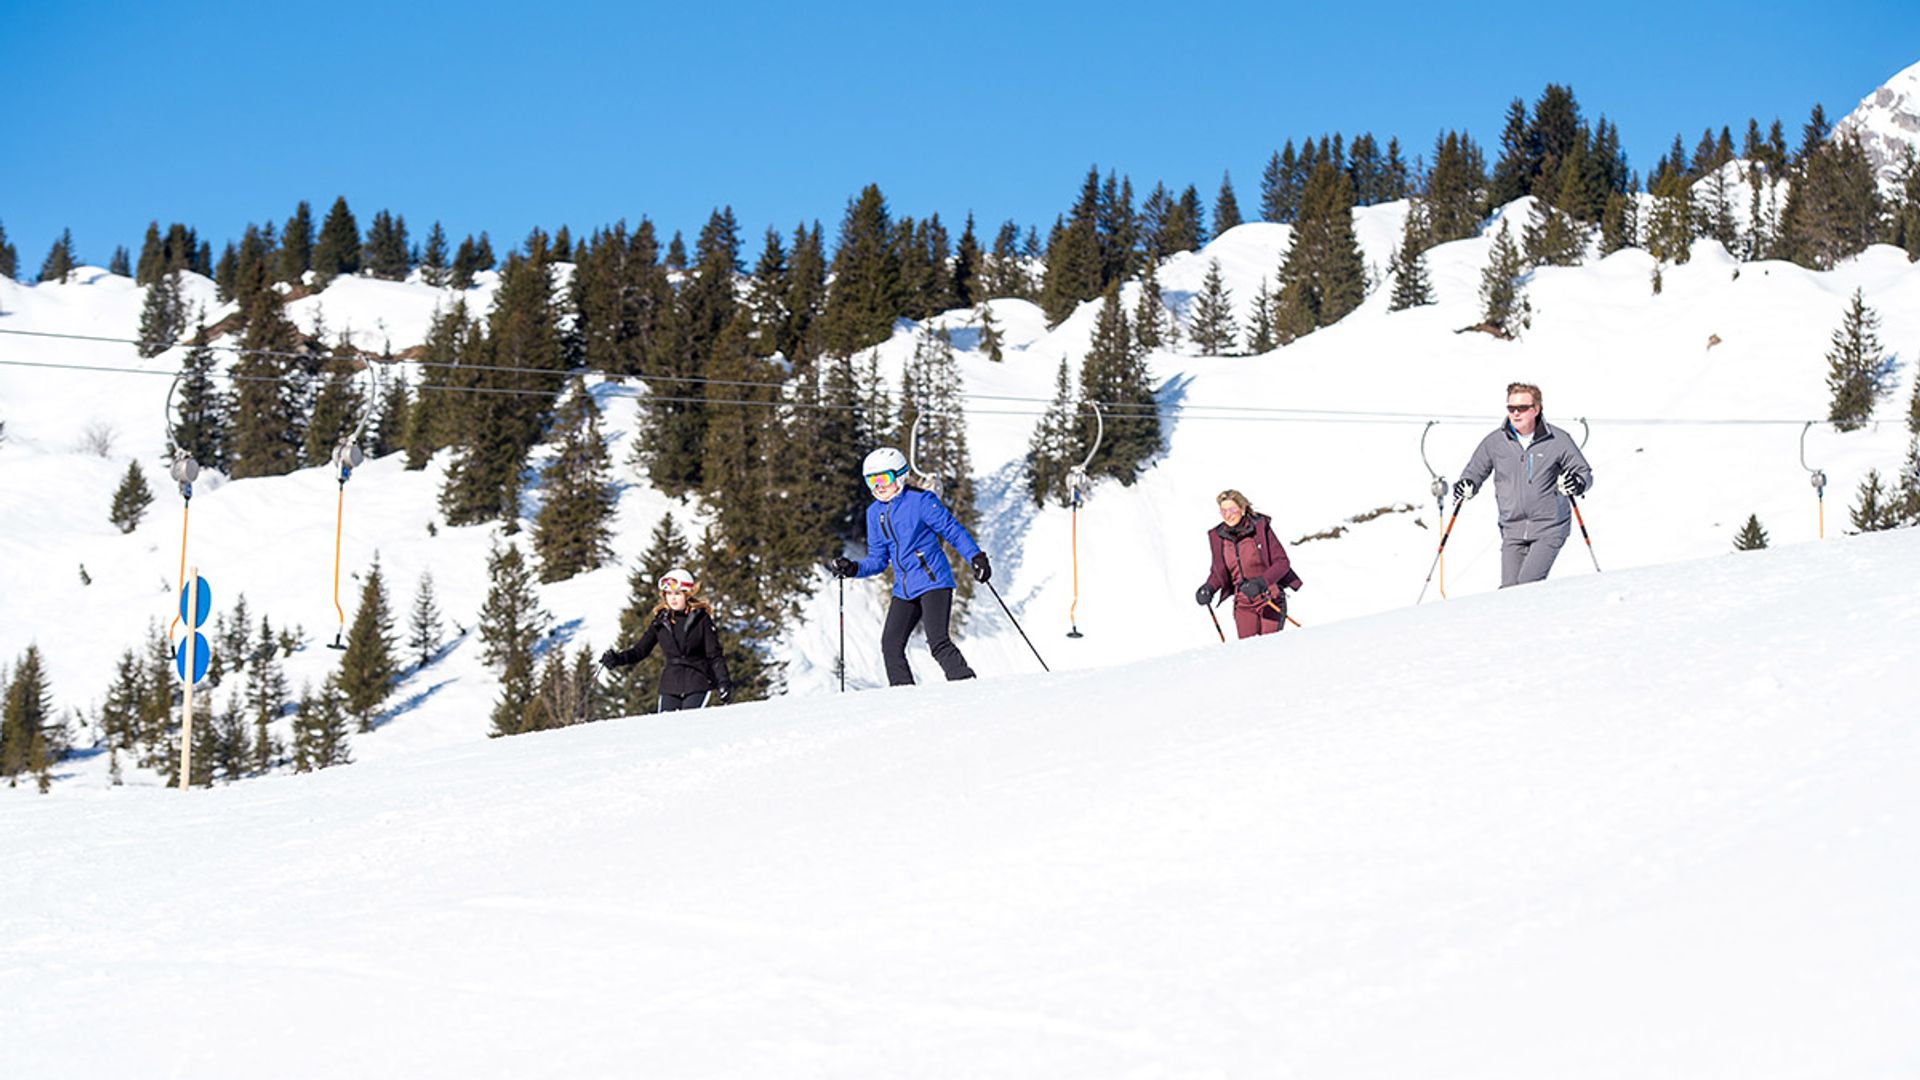 dutch royals skiing